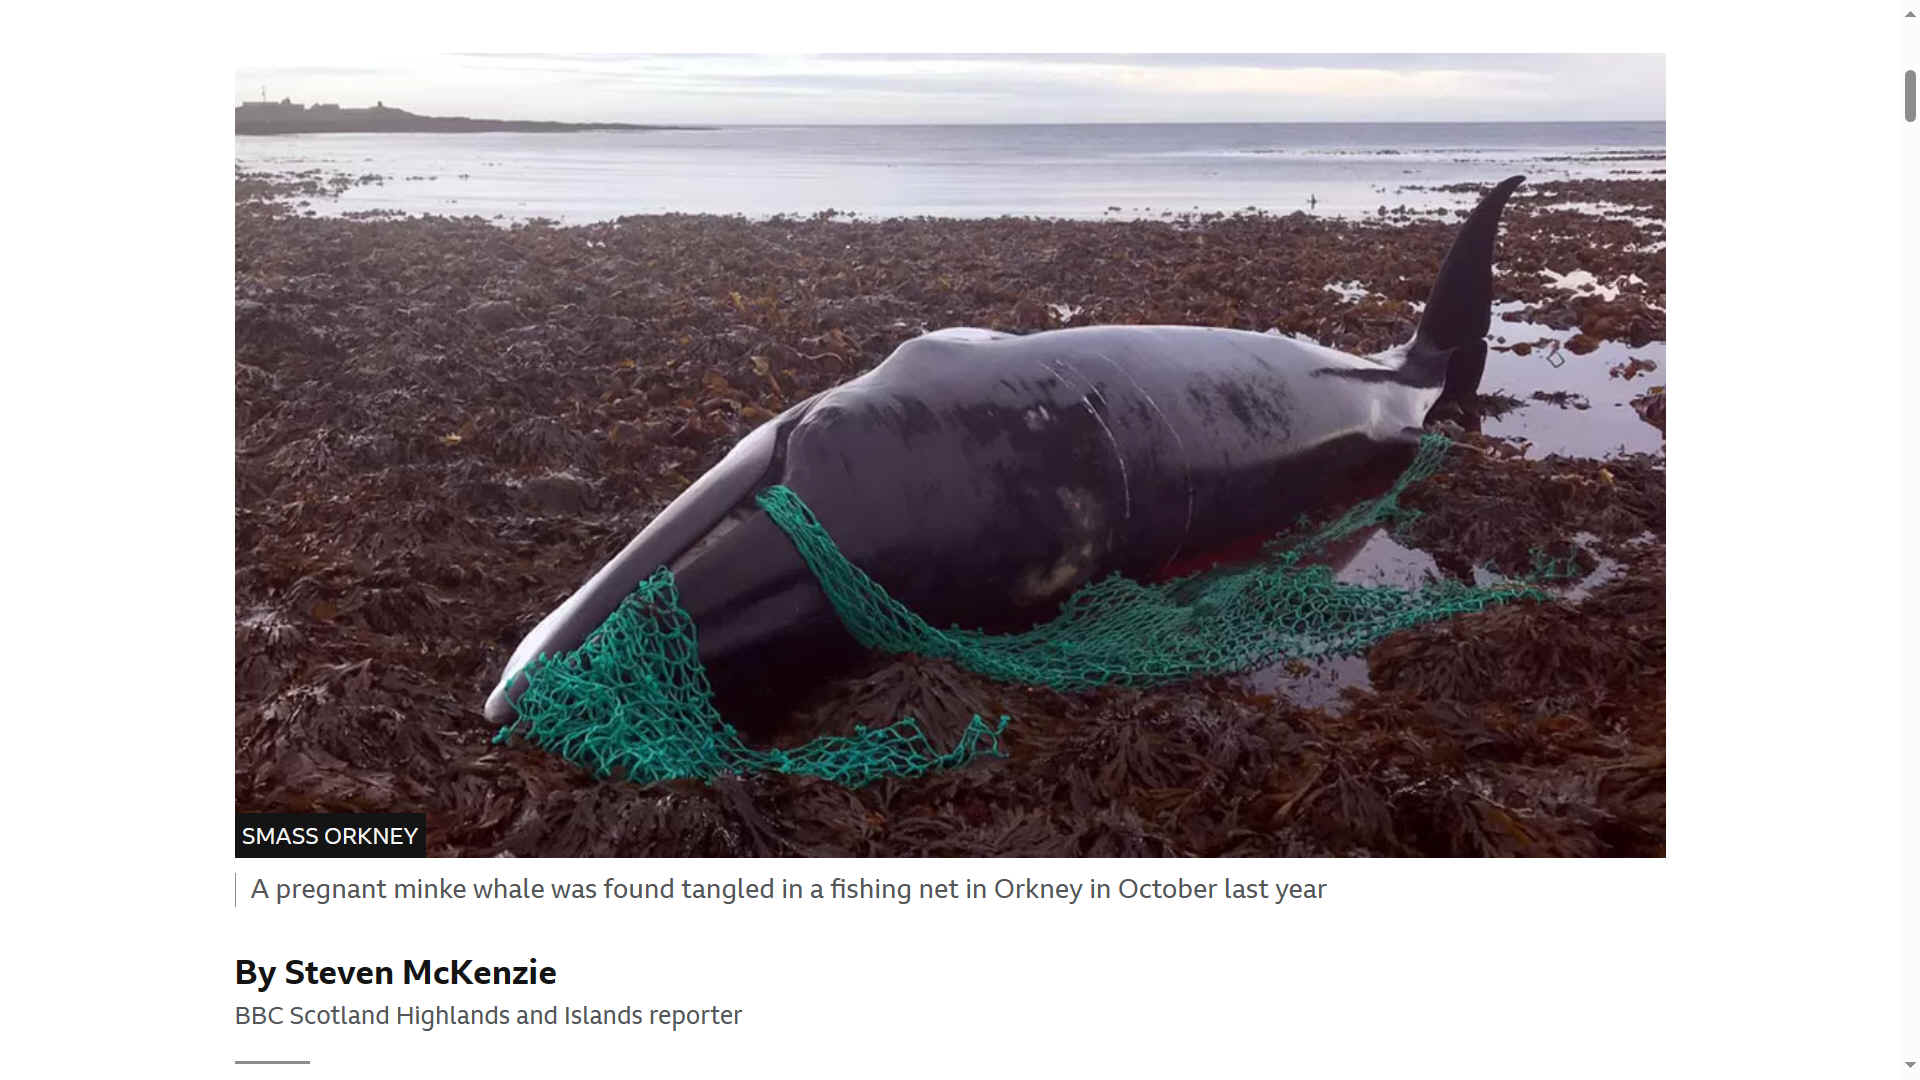 A Minke whale entangled in fishing nets in Orkney, October 2019